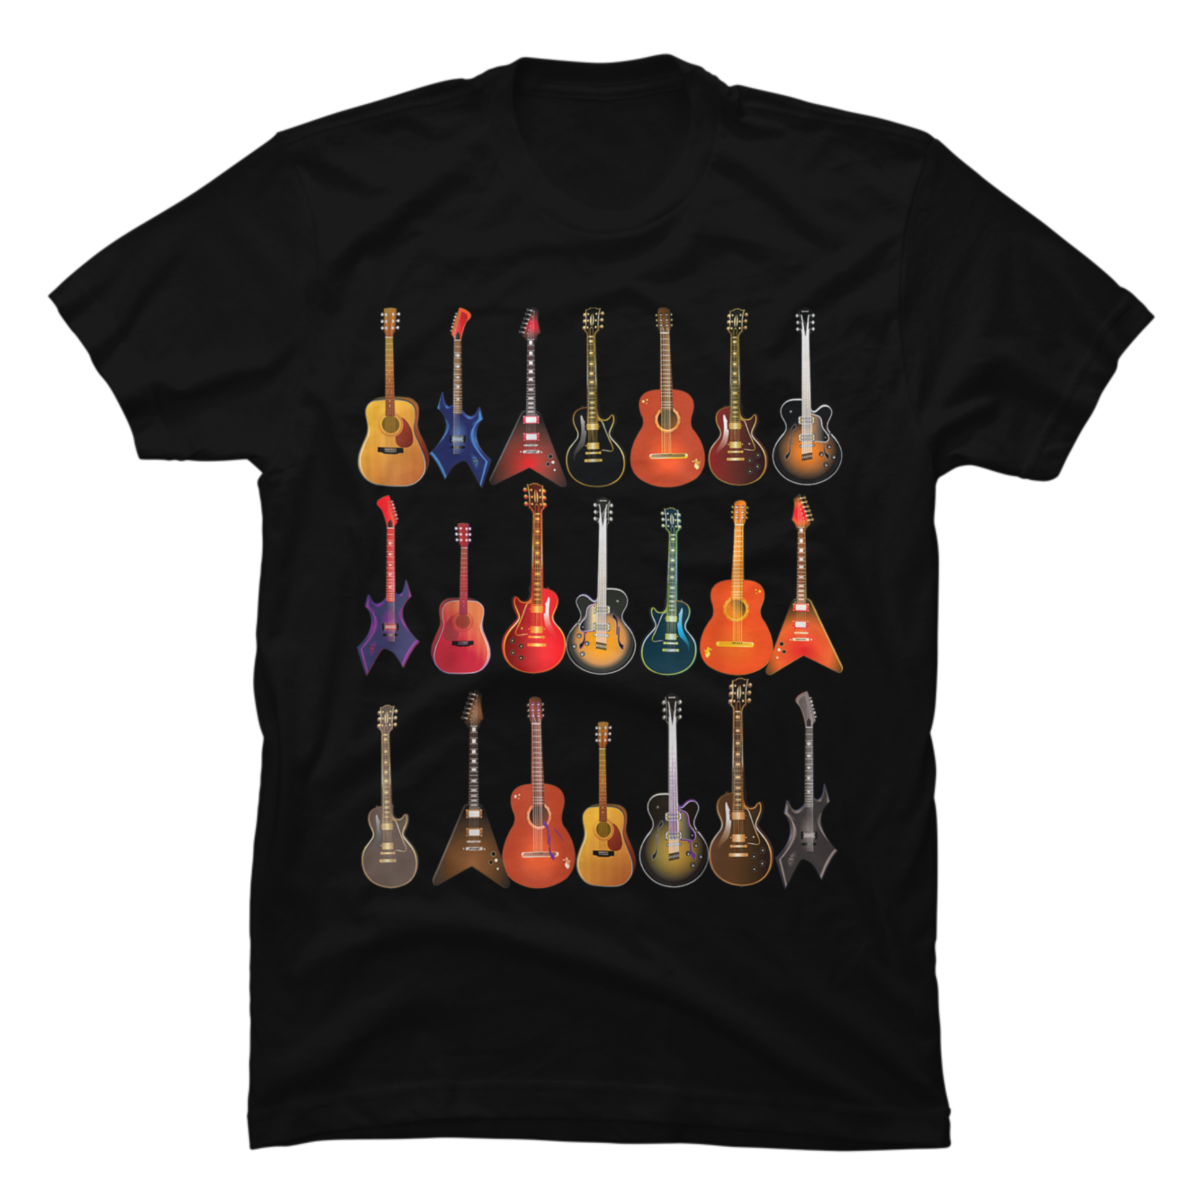 Guitar Musical Instruments - Buy t-shirt designs